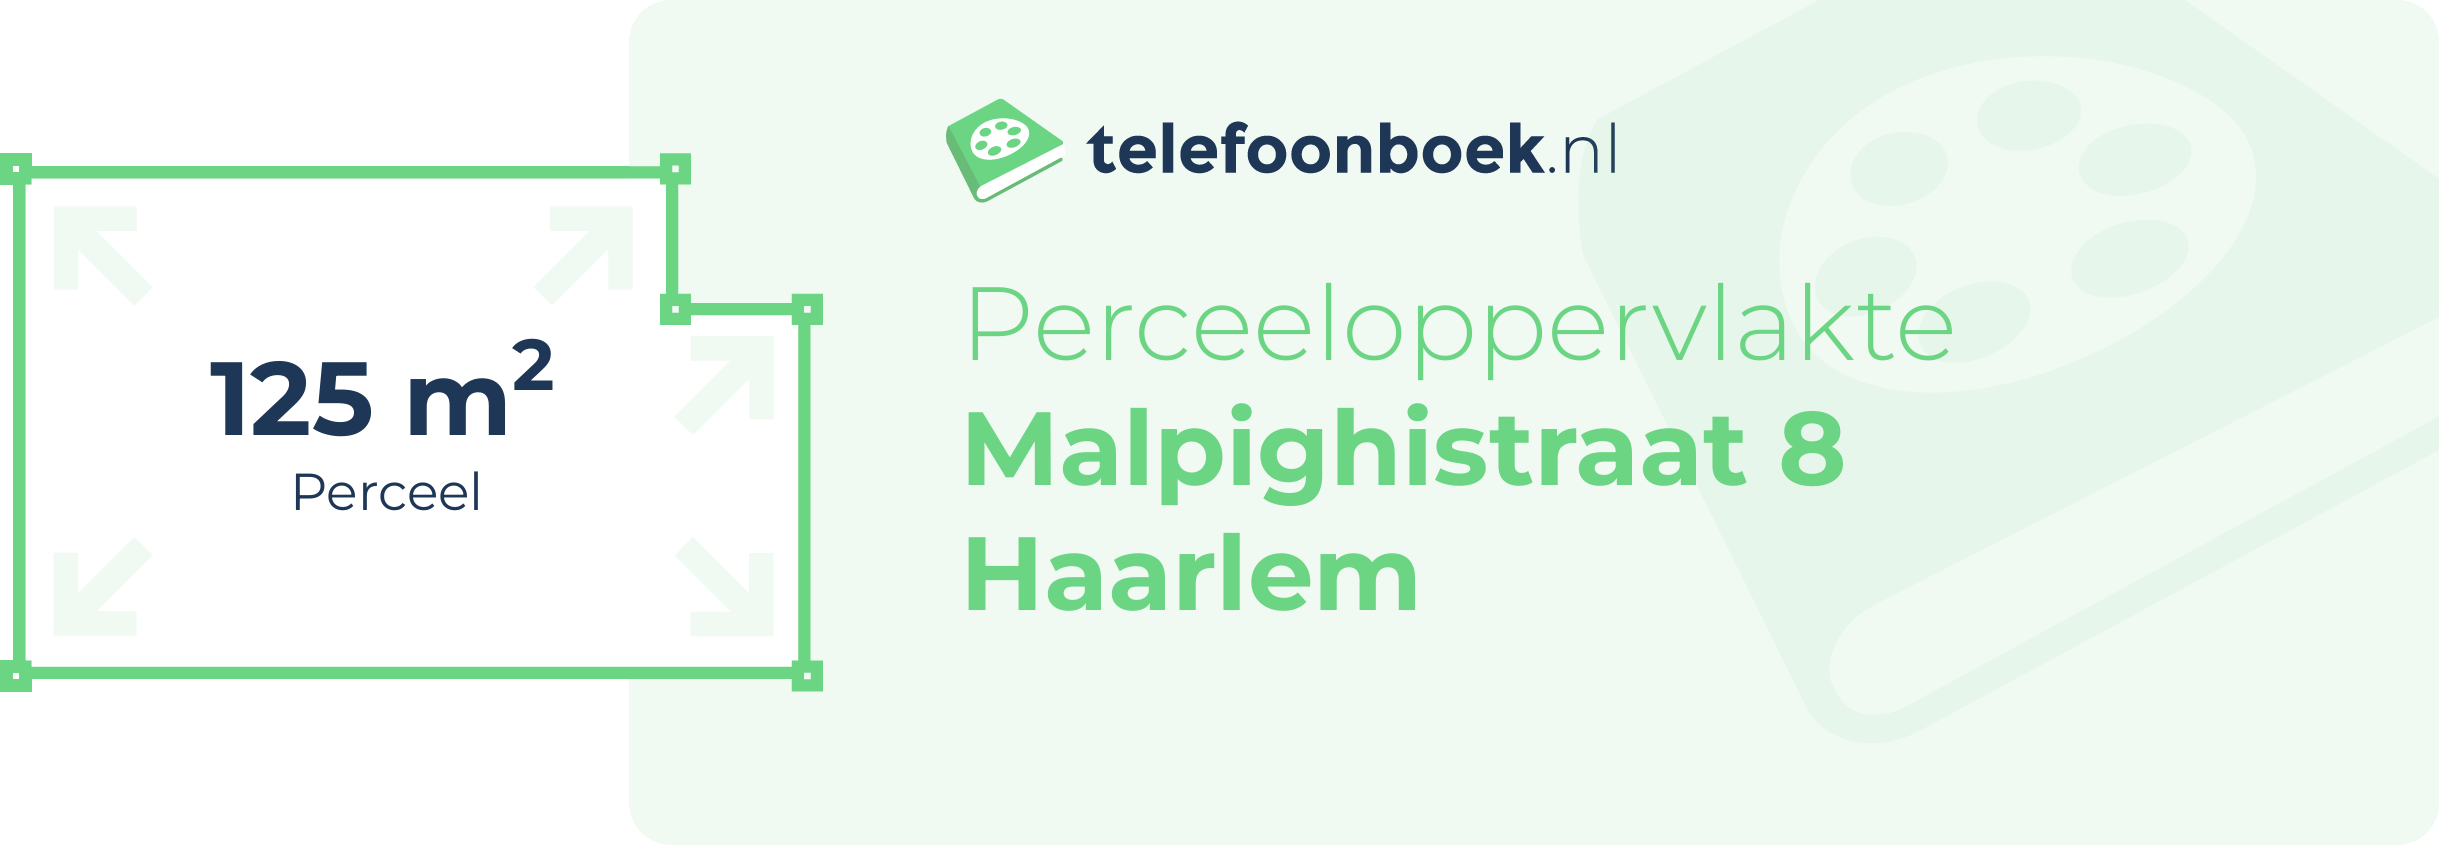 Perceeloppervlakte Malpighistraat 8 Haarlem